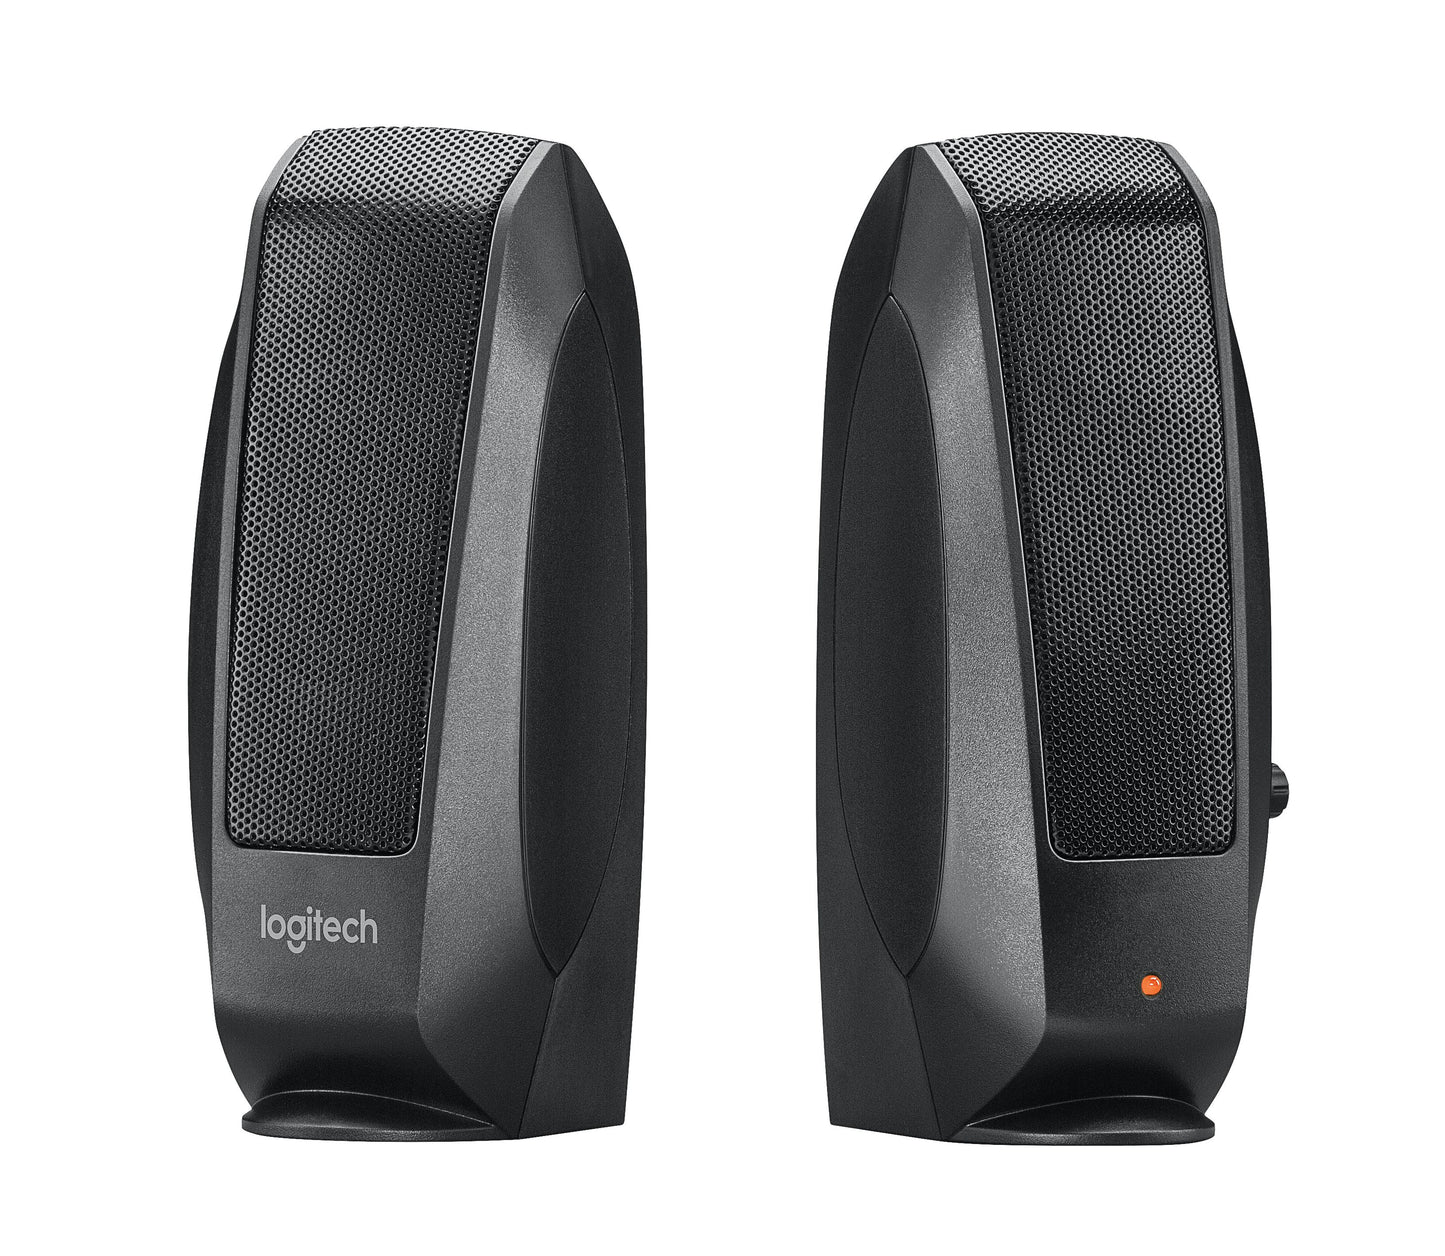 Logitech S-120 Speaker System 2.0 2.30 W RMS Black - EU Version 980-000010